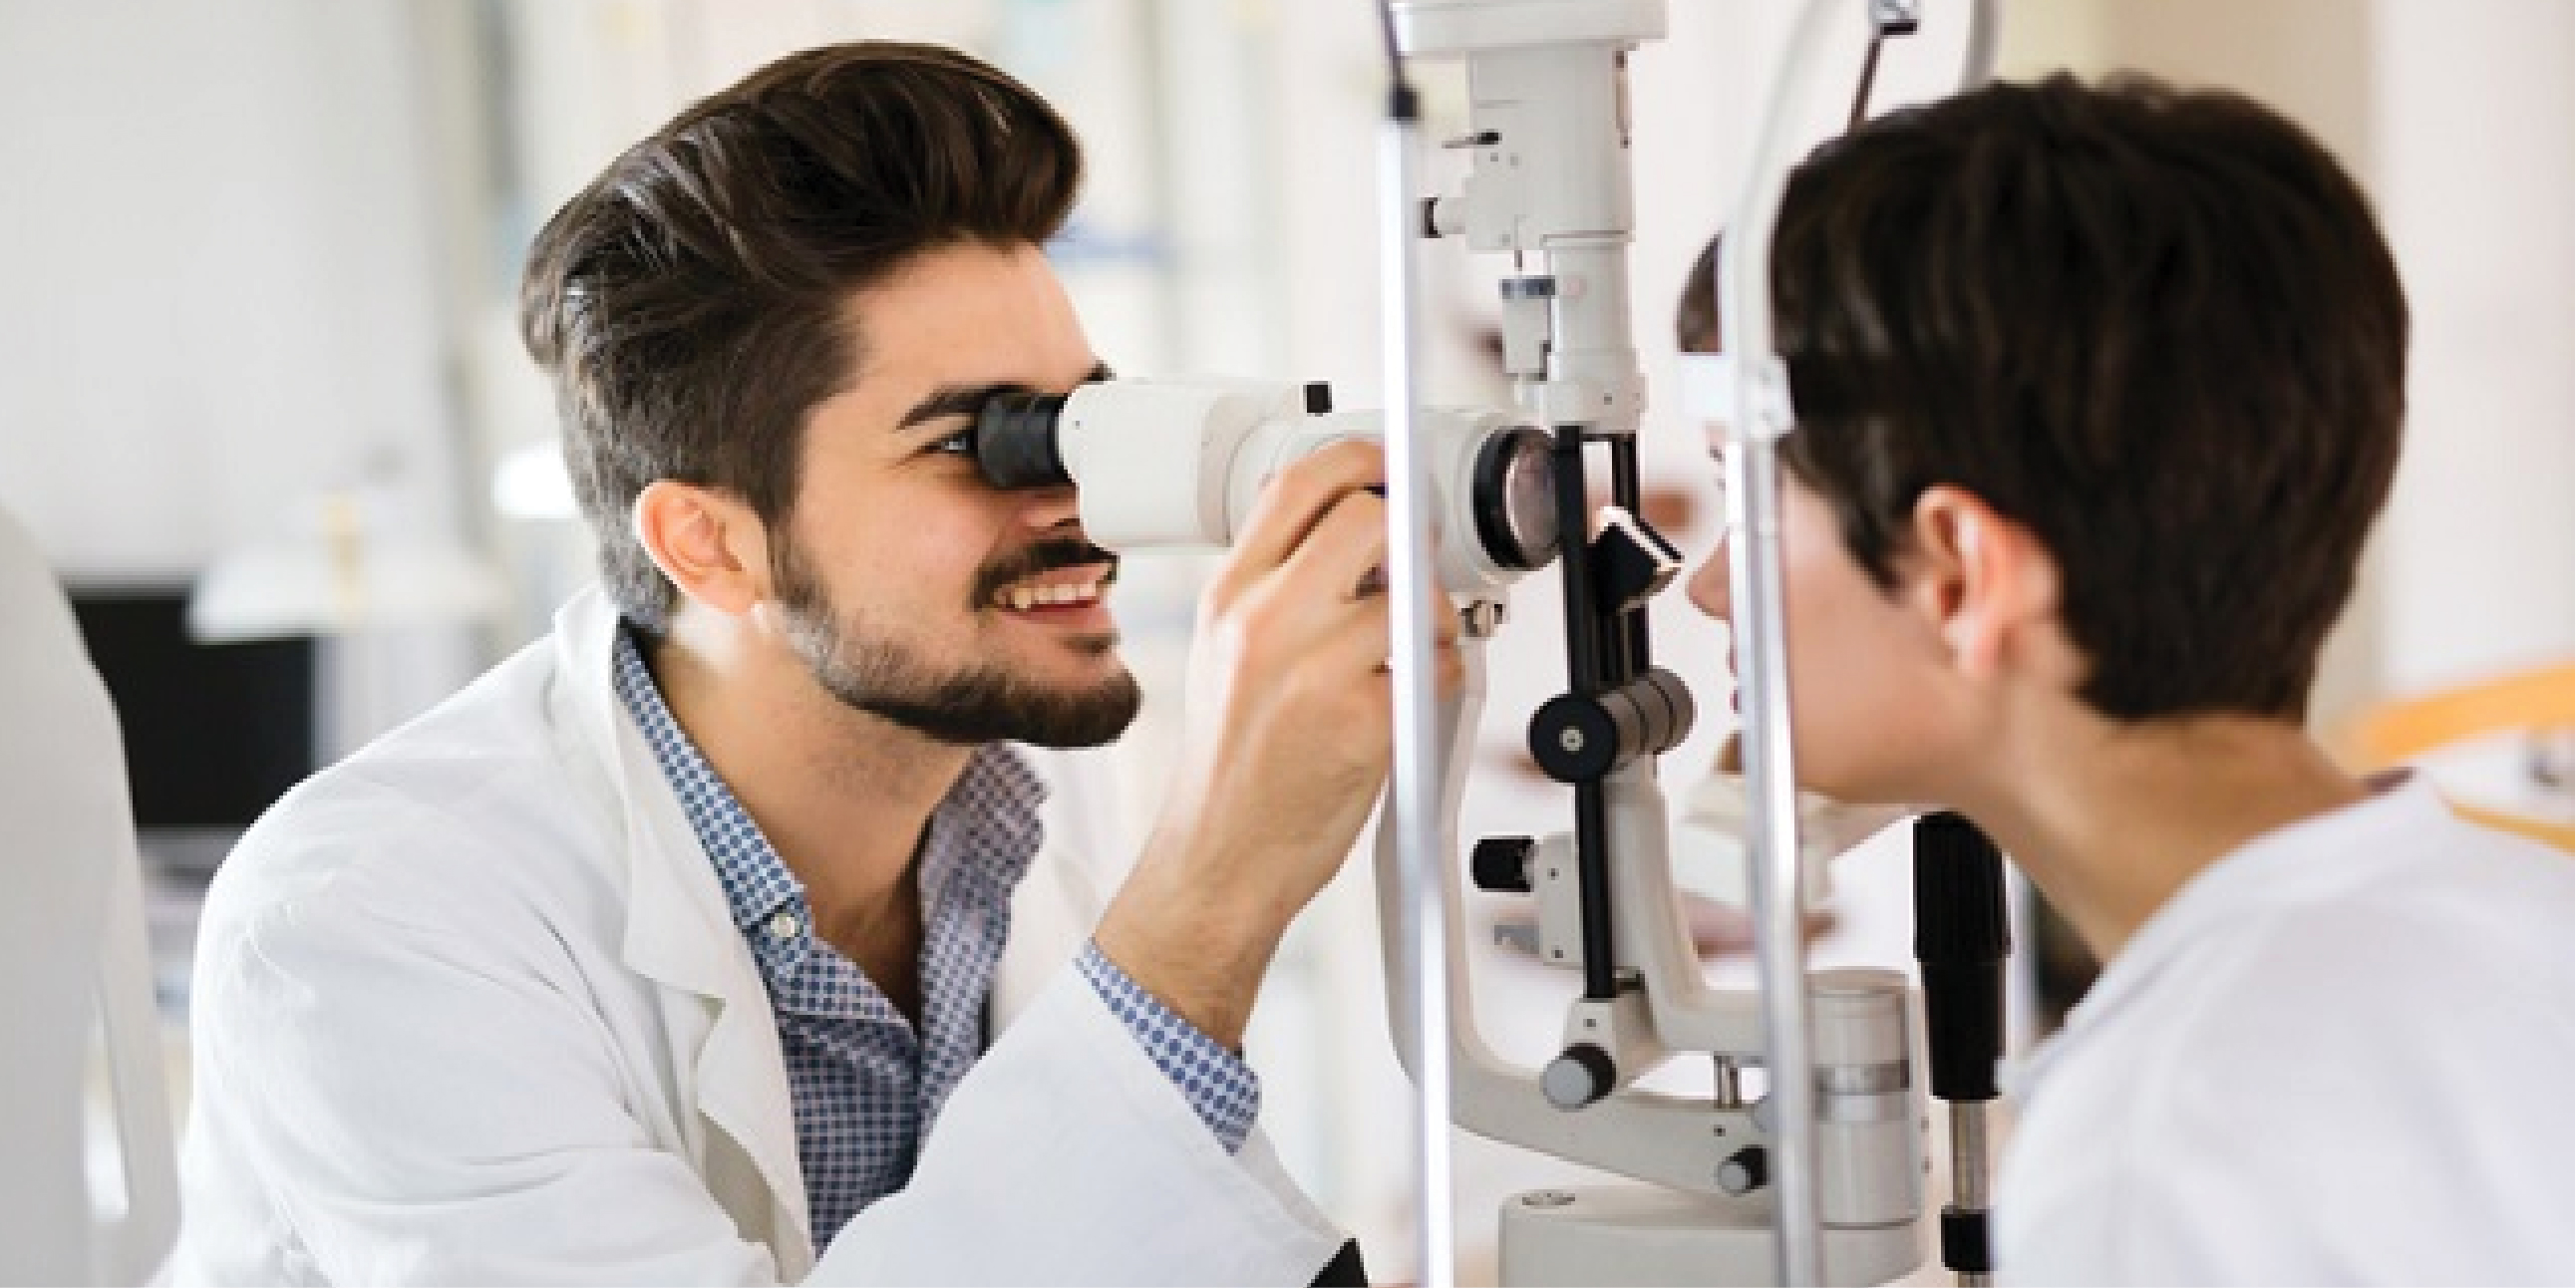 optometry phd in india